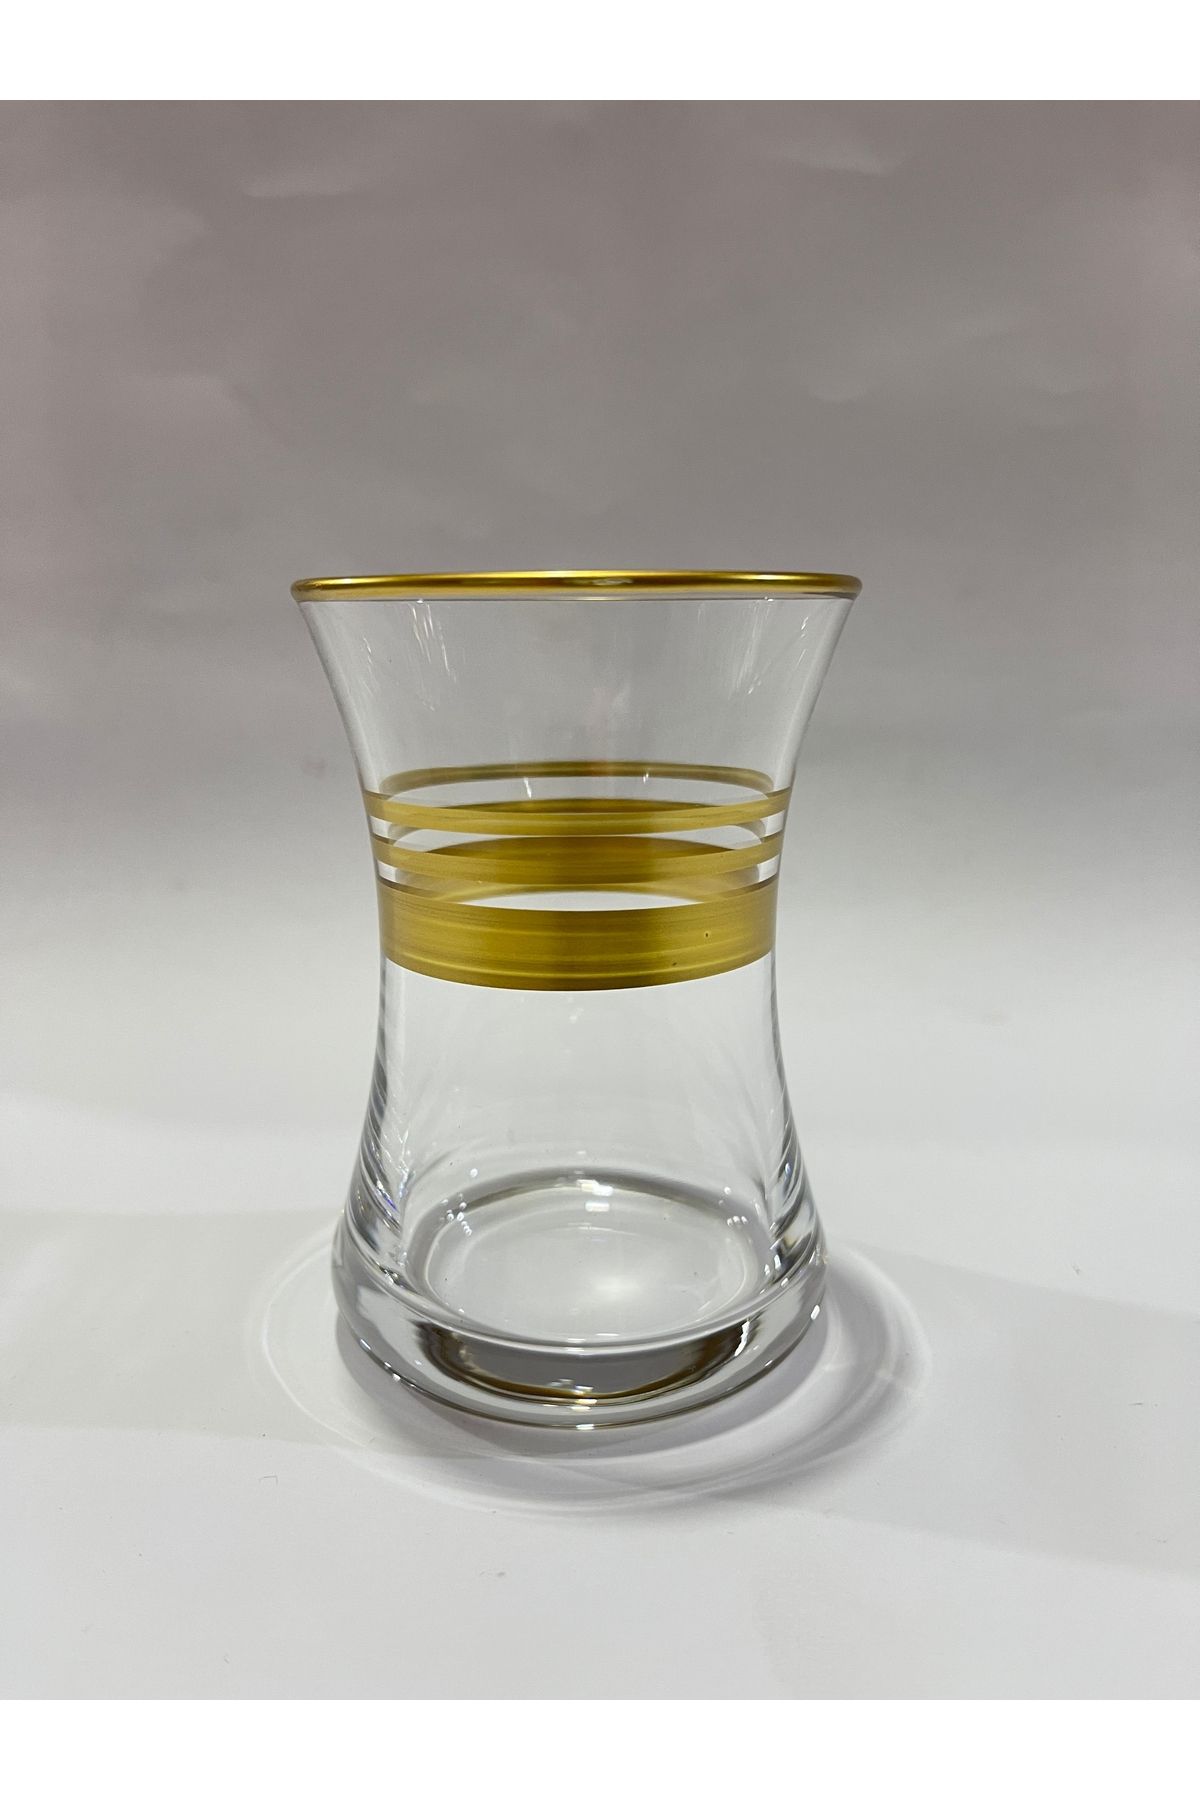 GLASSY misis ince beli çay bardağı 6 lı dalton metlik sarı bardak